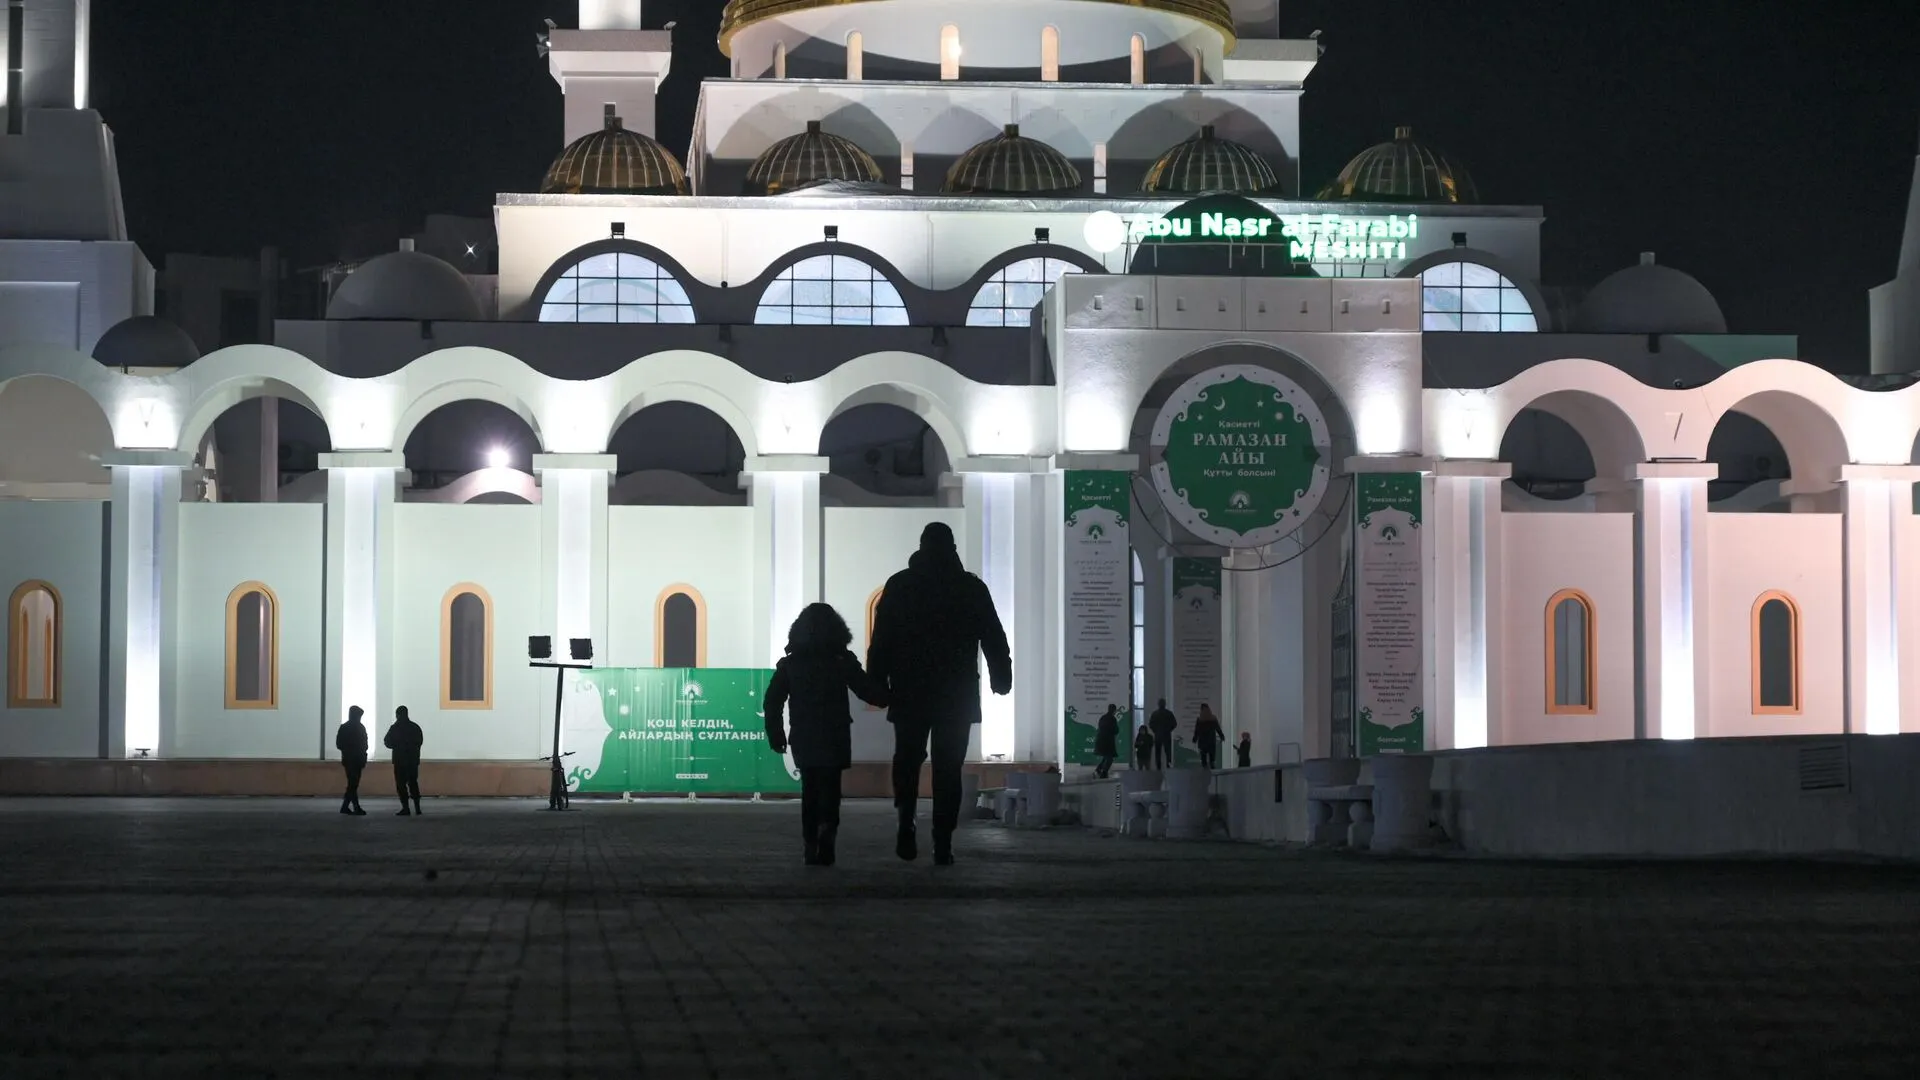 Начало рамадана в казахстане. Намаз в мечети Казахстан Астана. Праздник у мусульман в апреле картинки.